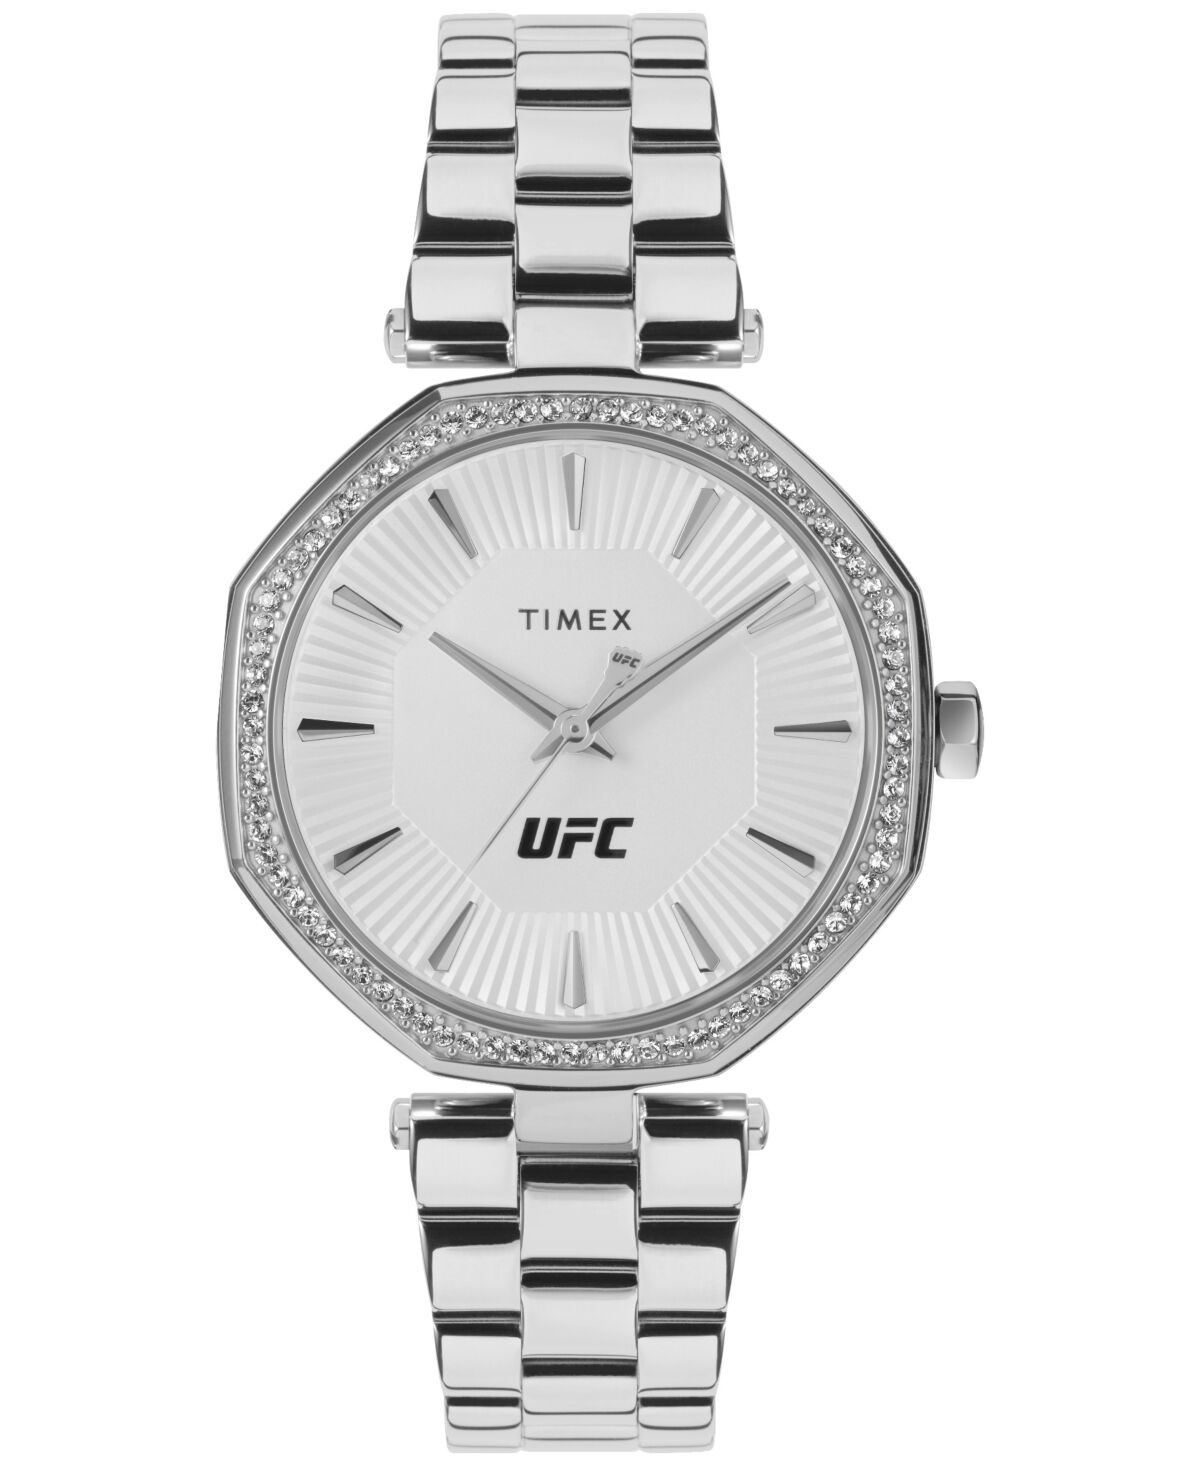 Timex Ufc Women's Jewel Analog Silver-Tone Stainless Steel Watch, 36mm - Silver-Tone